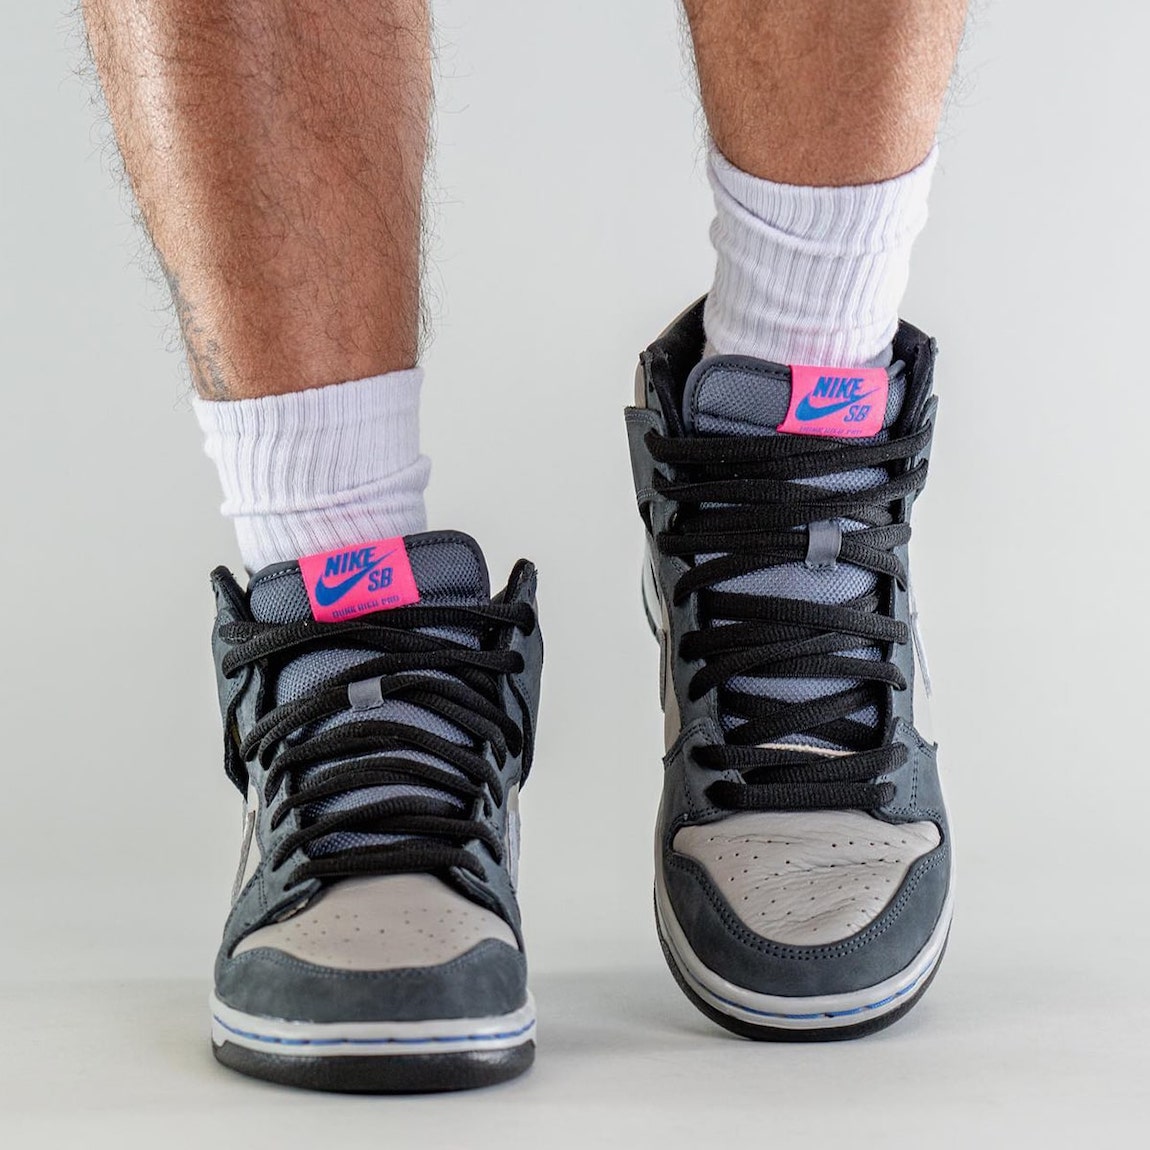 Nike SB Dunk High Medium Grey DJ9800-001 Release Date On-Feet